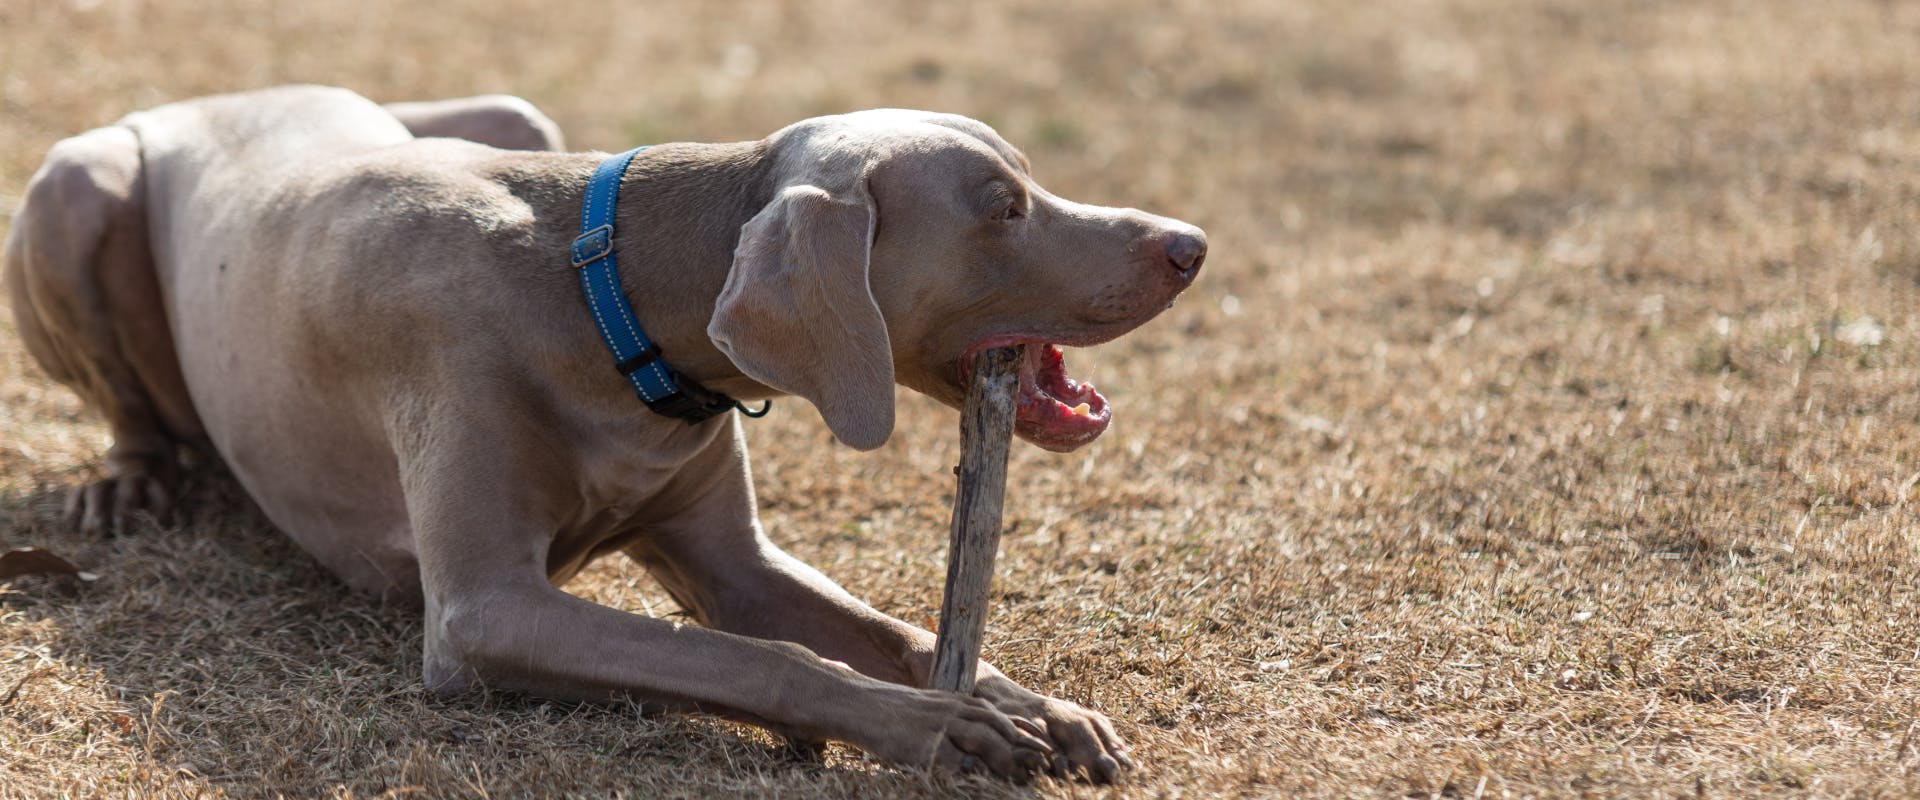 A dog wearing a collar chews on a stick.